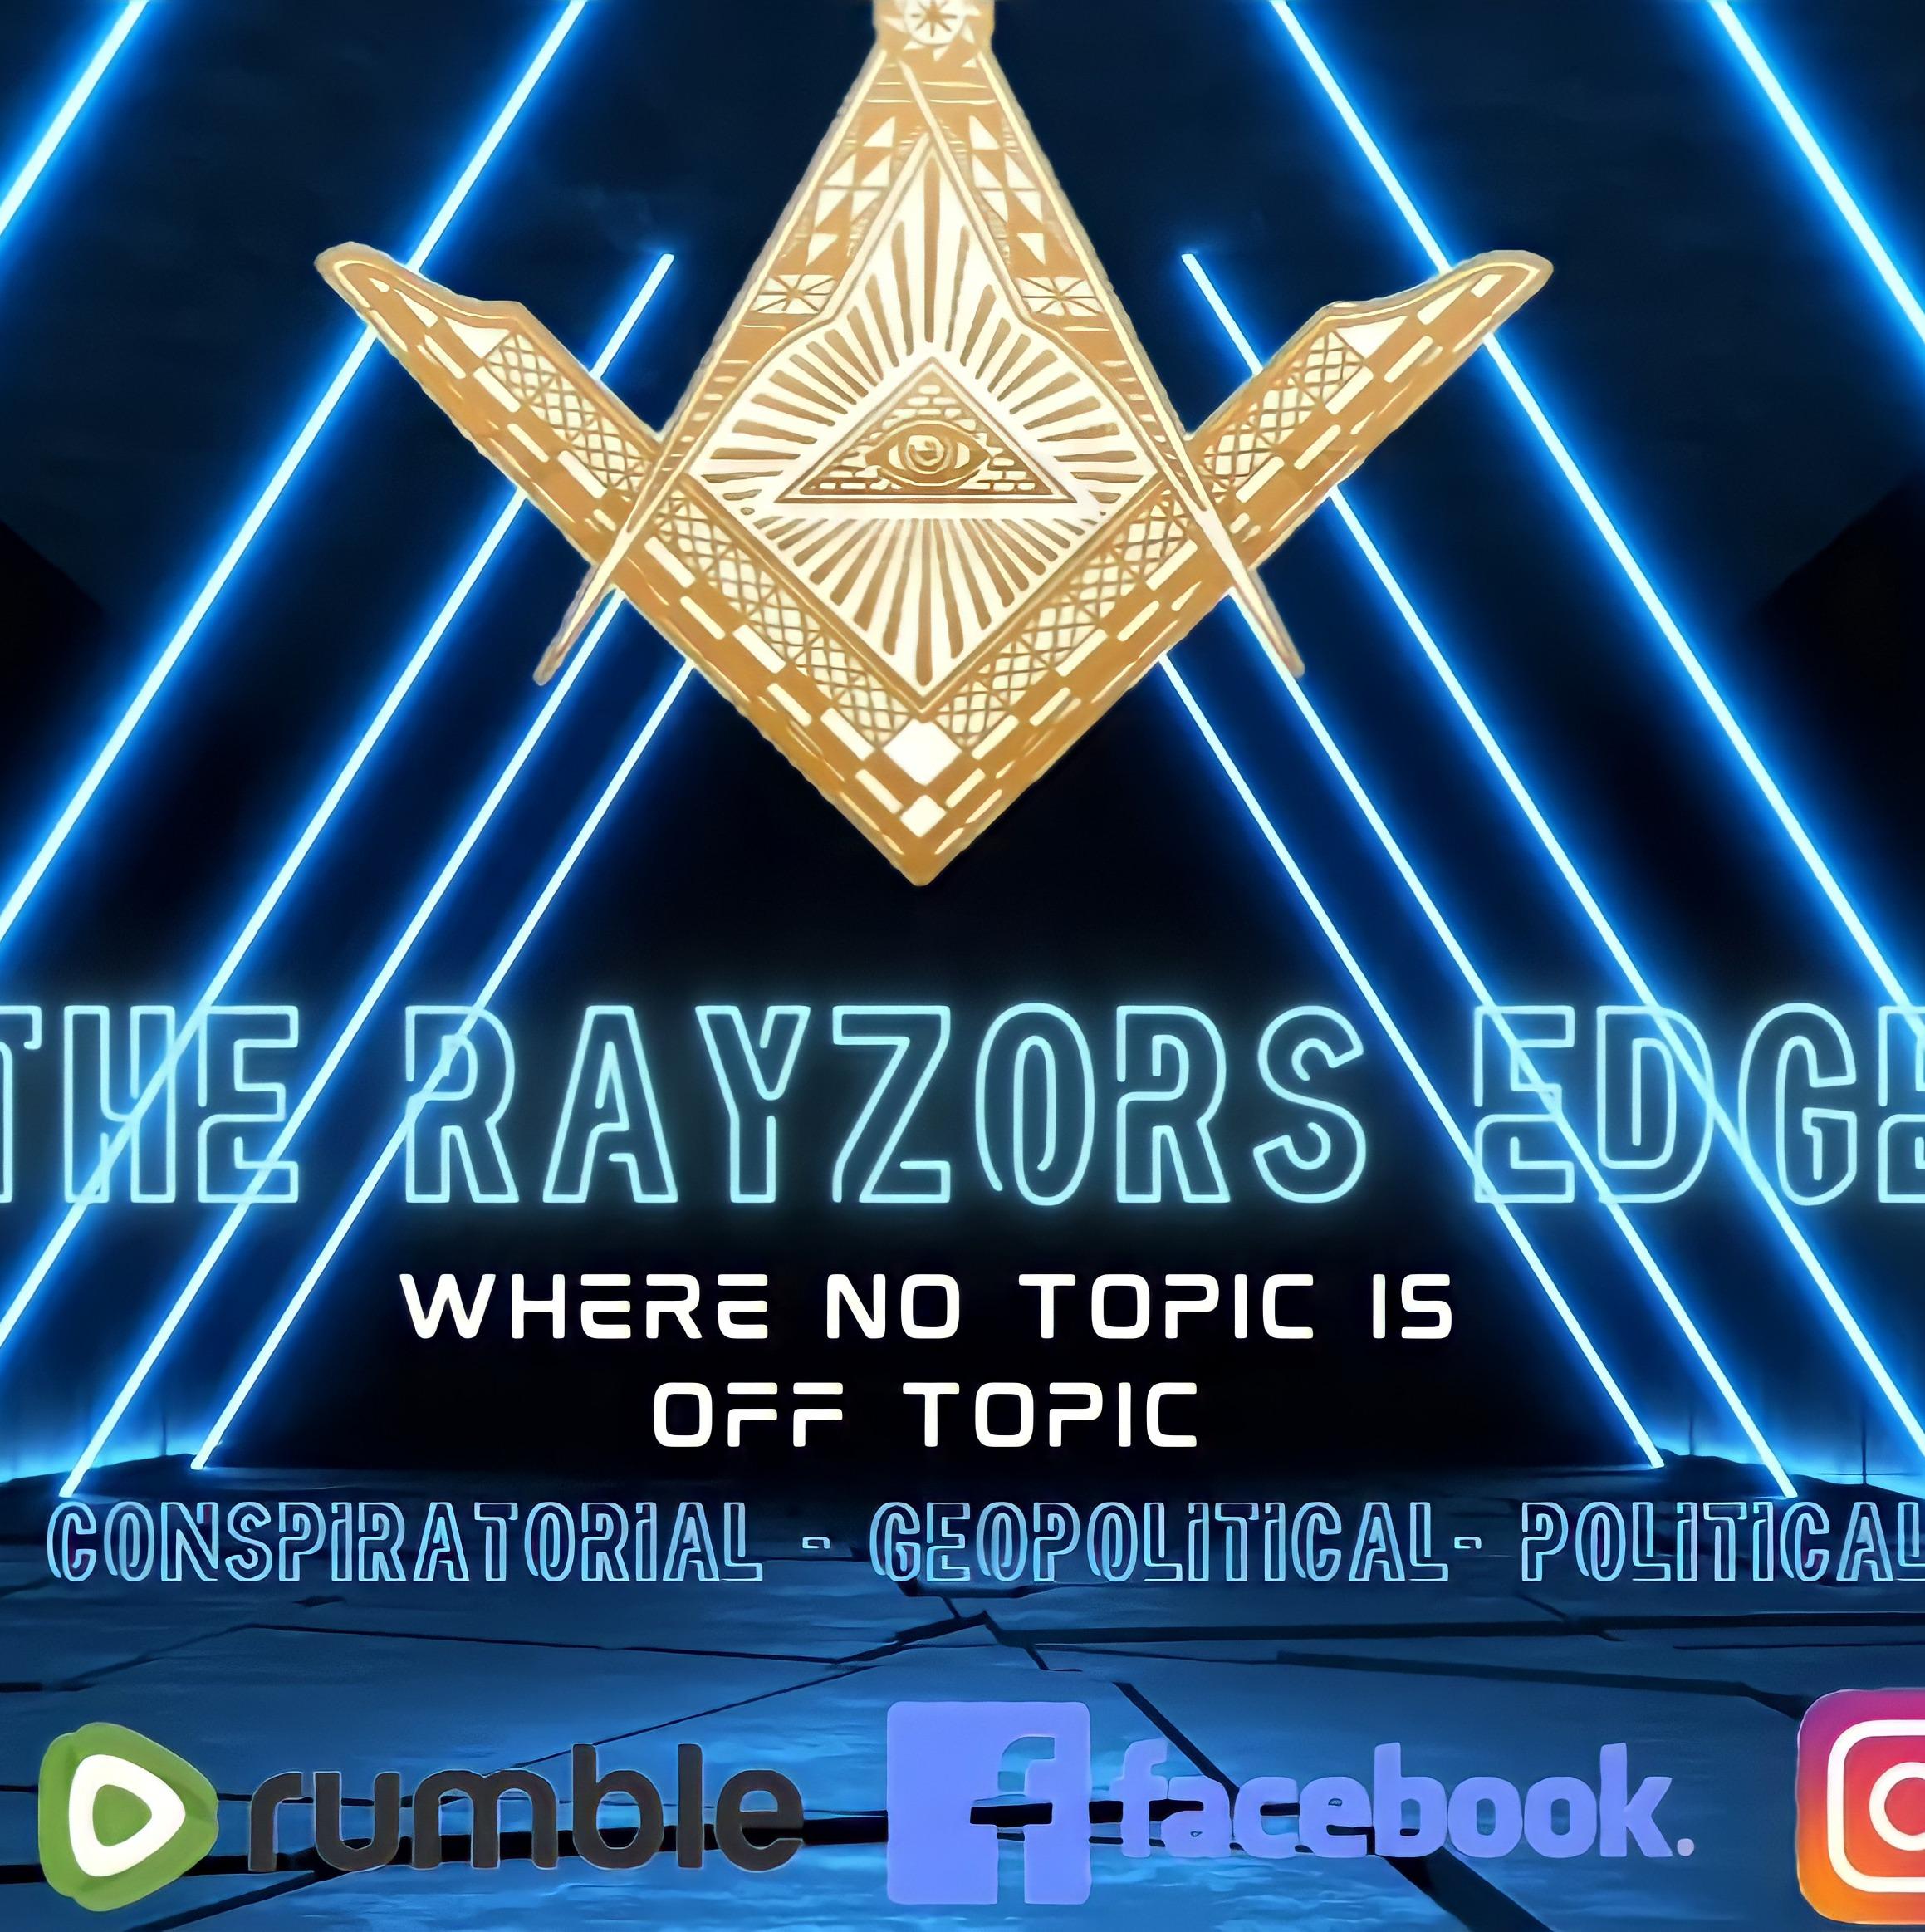 The Rayzors Edge Podcast